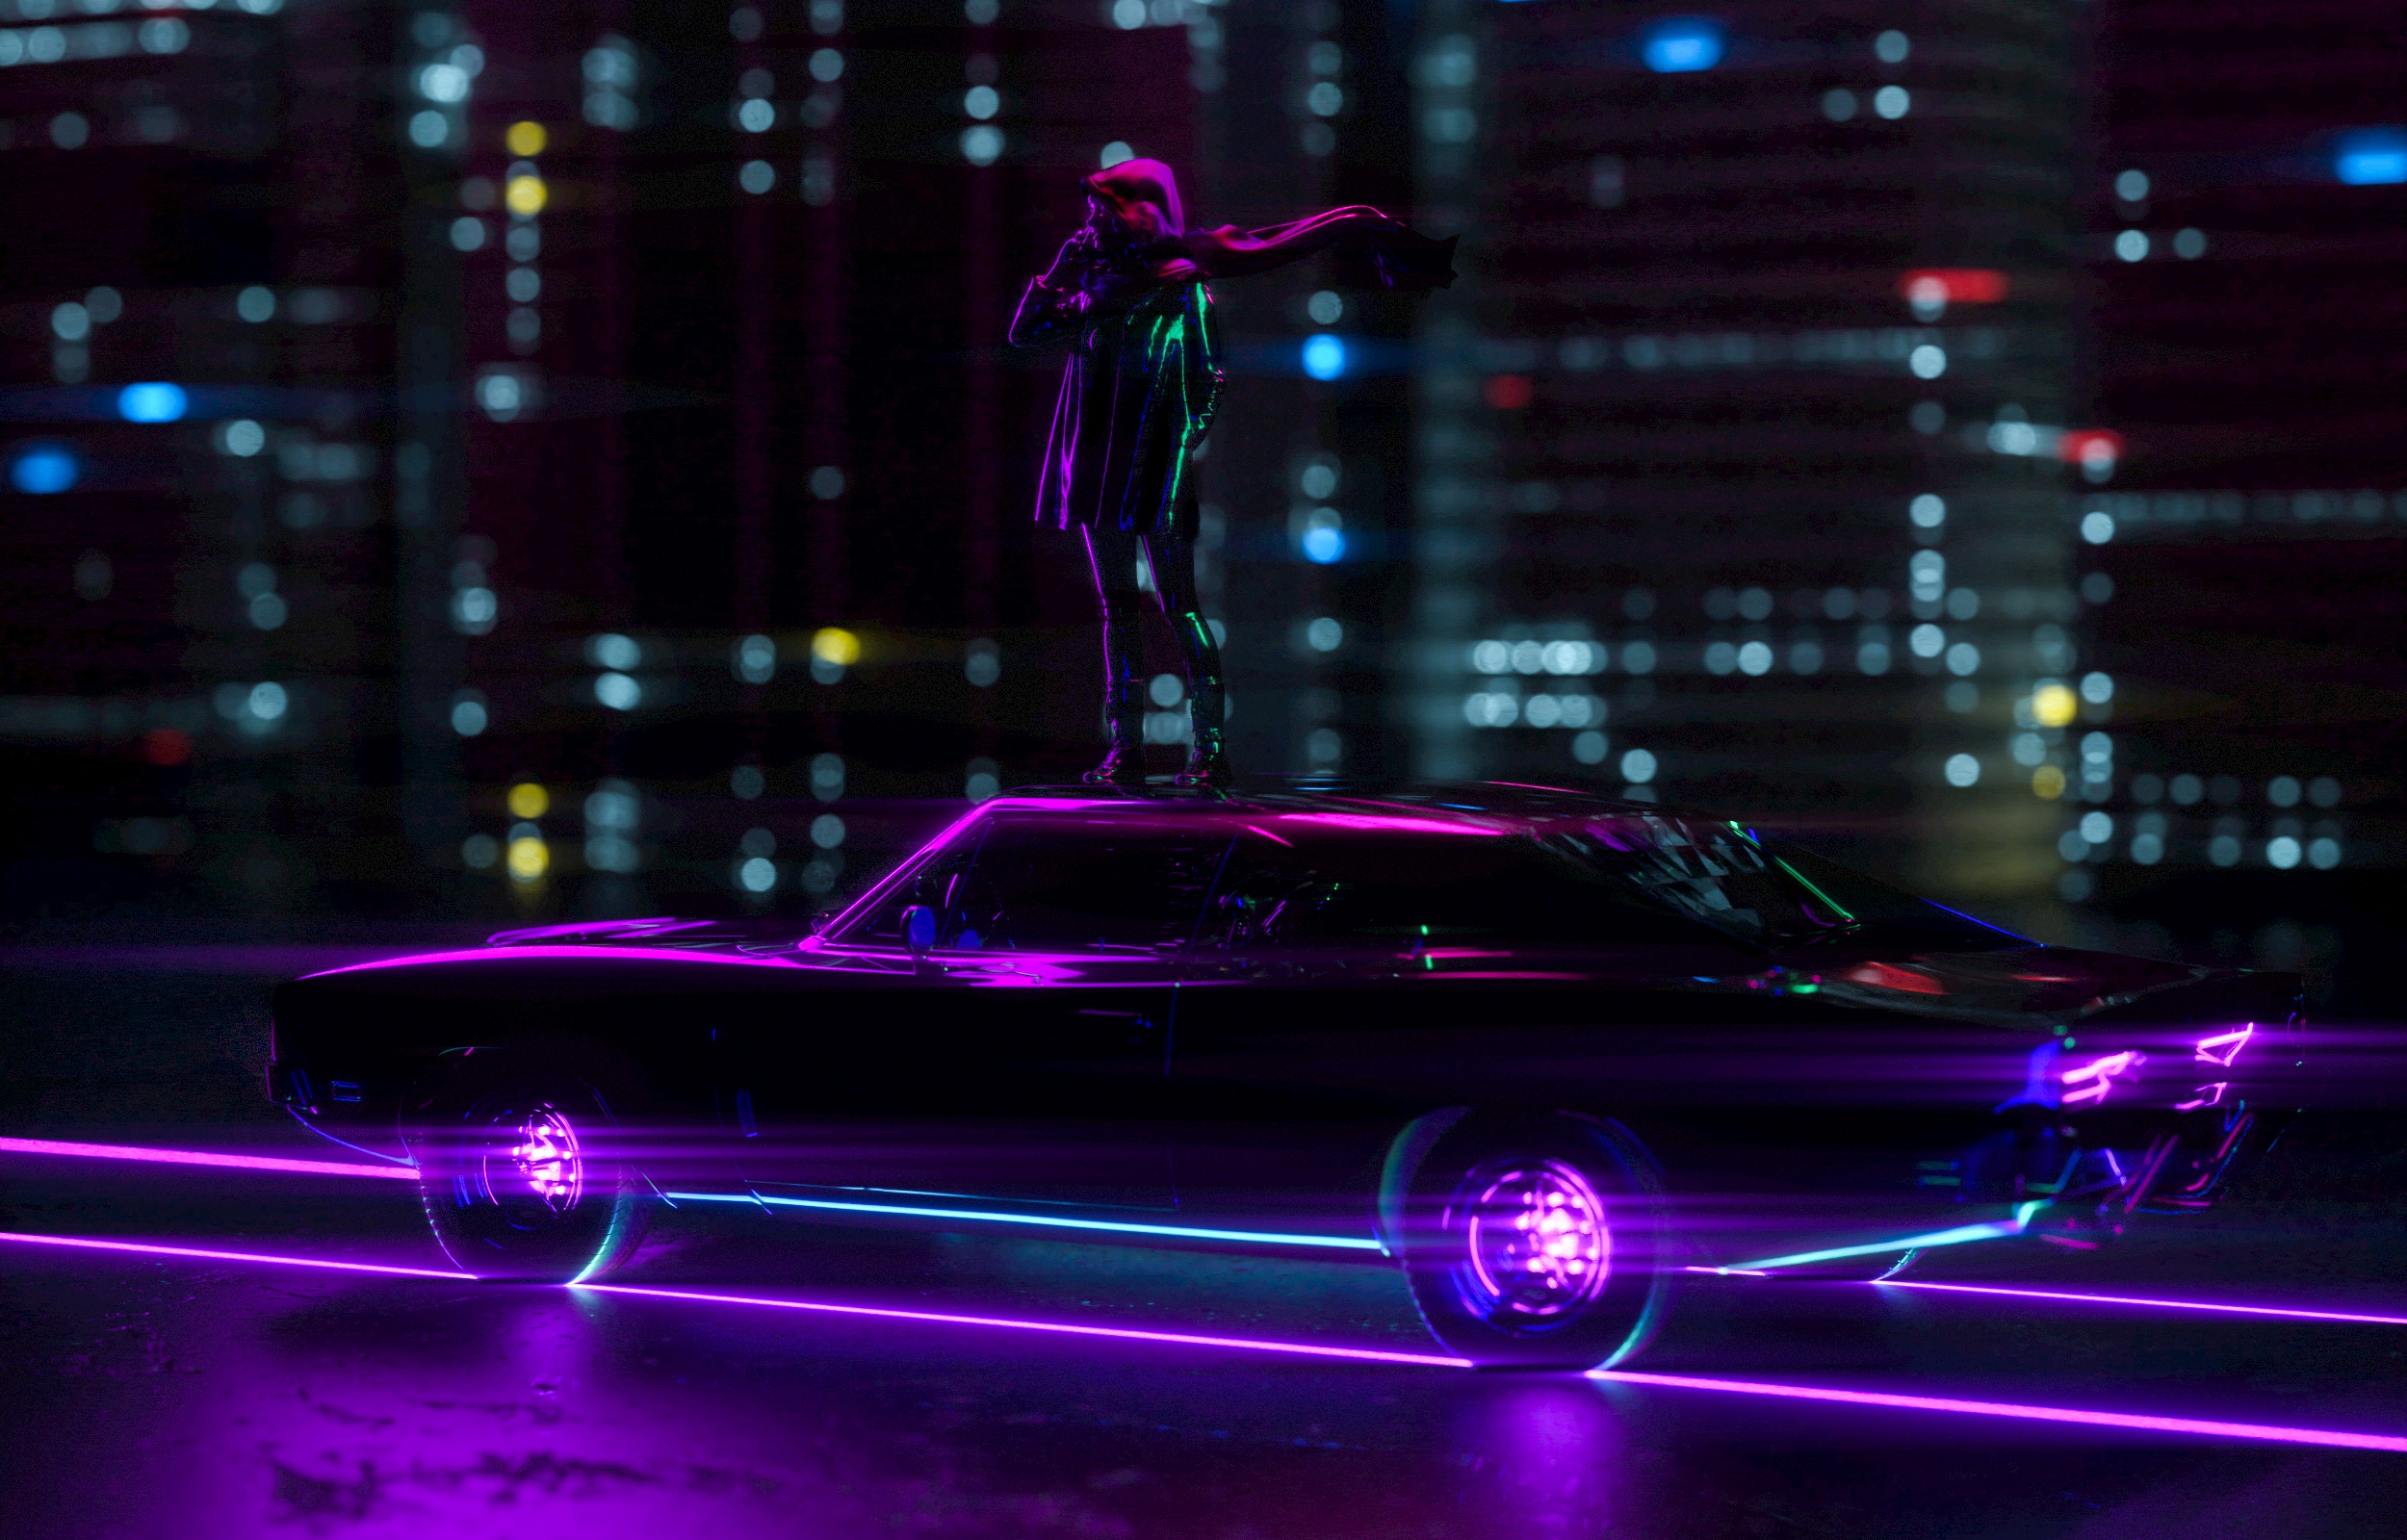 General 2500x1600 neon digital art artwork dark car vehicle